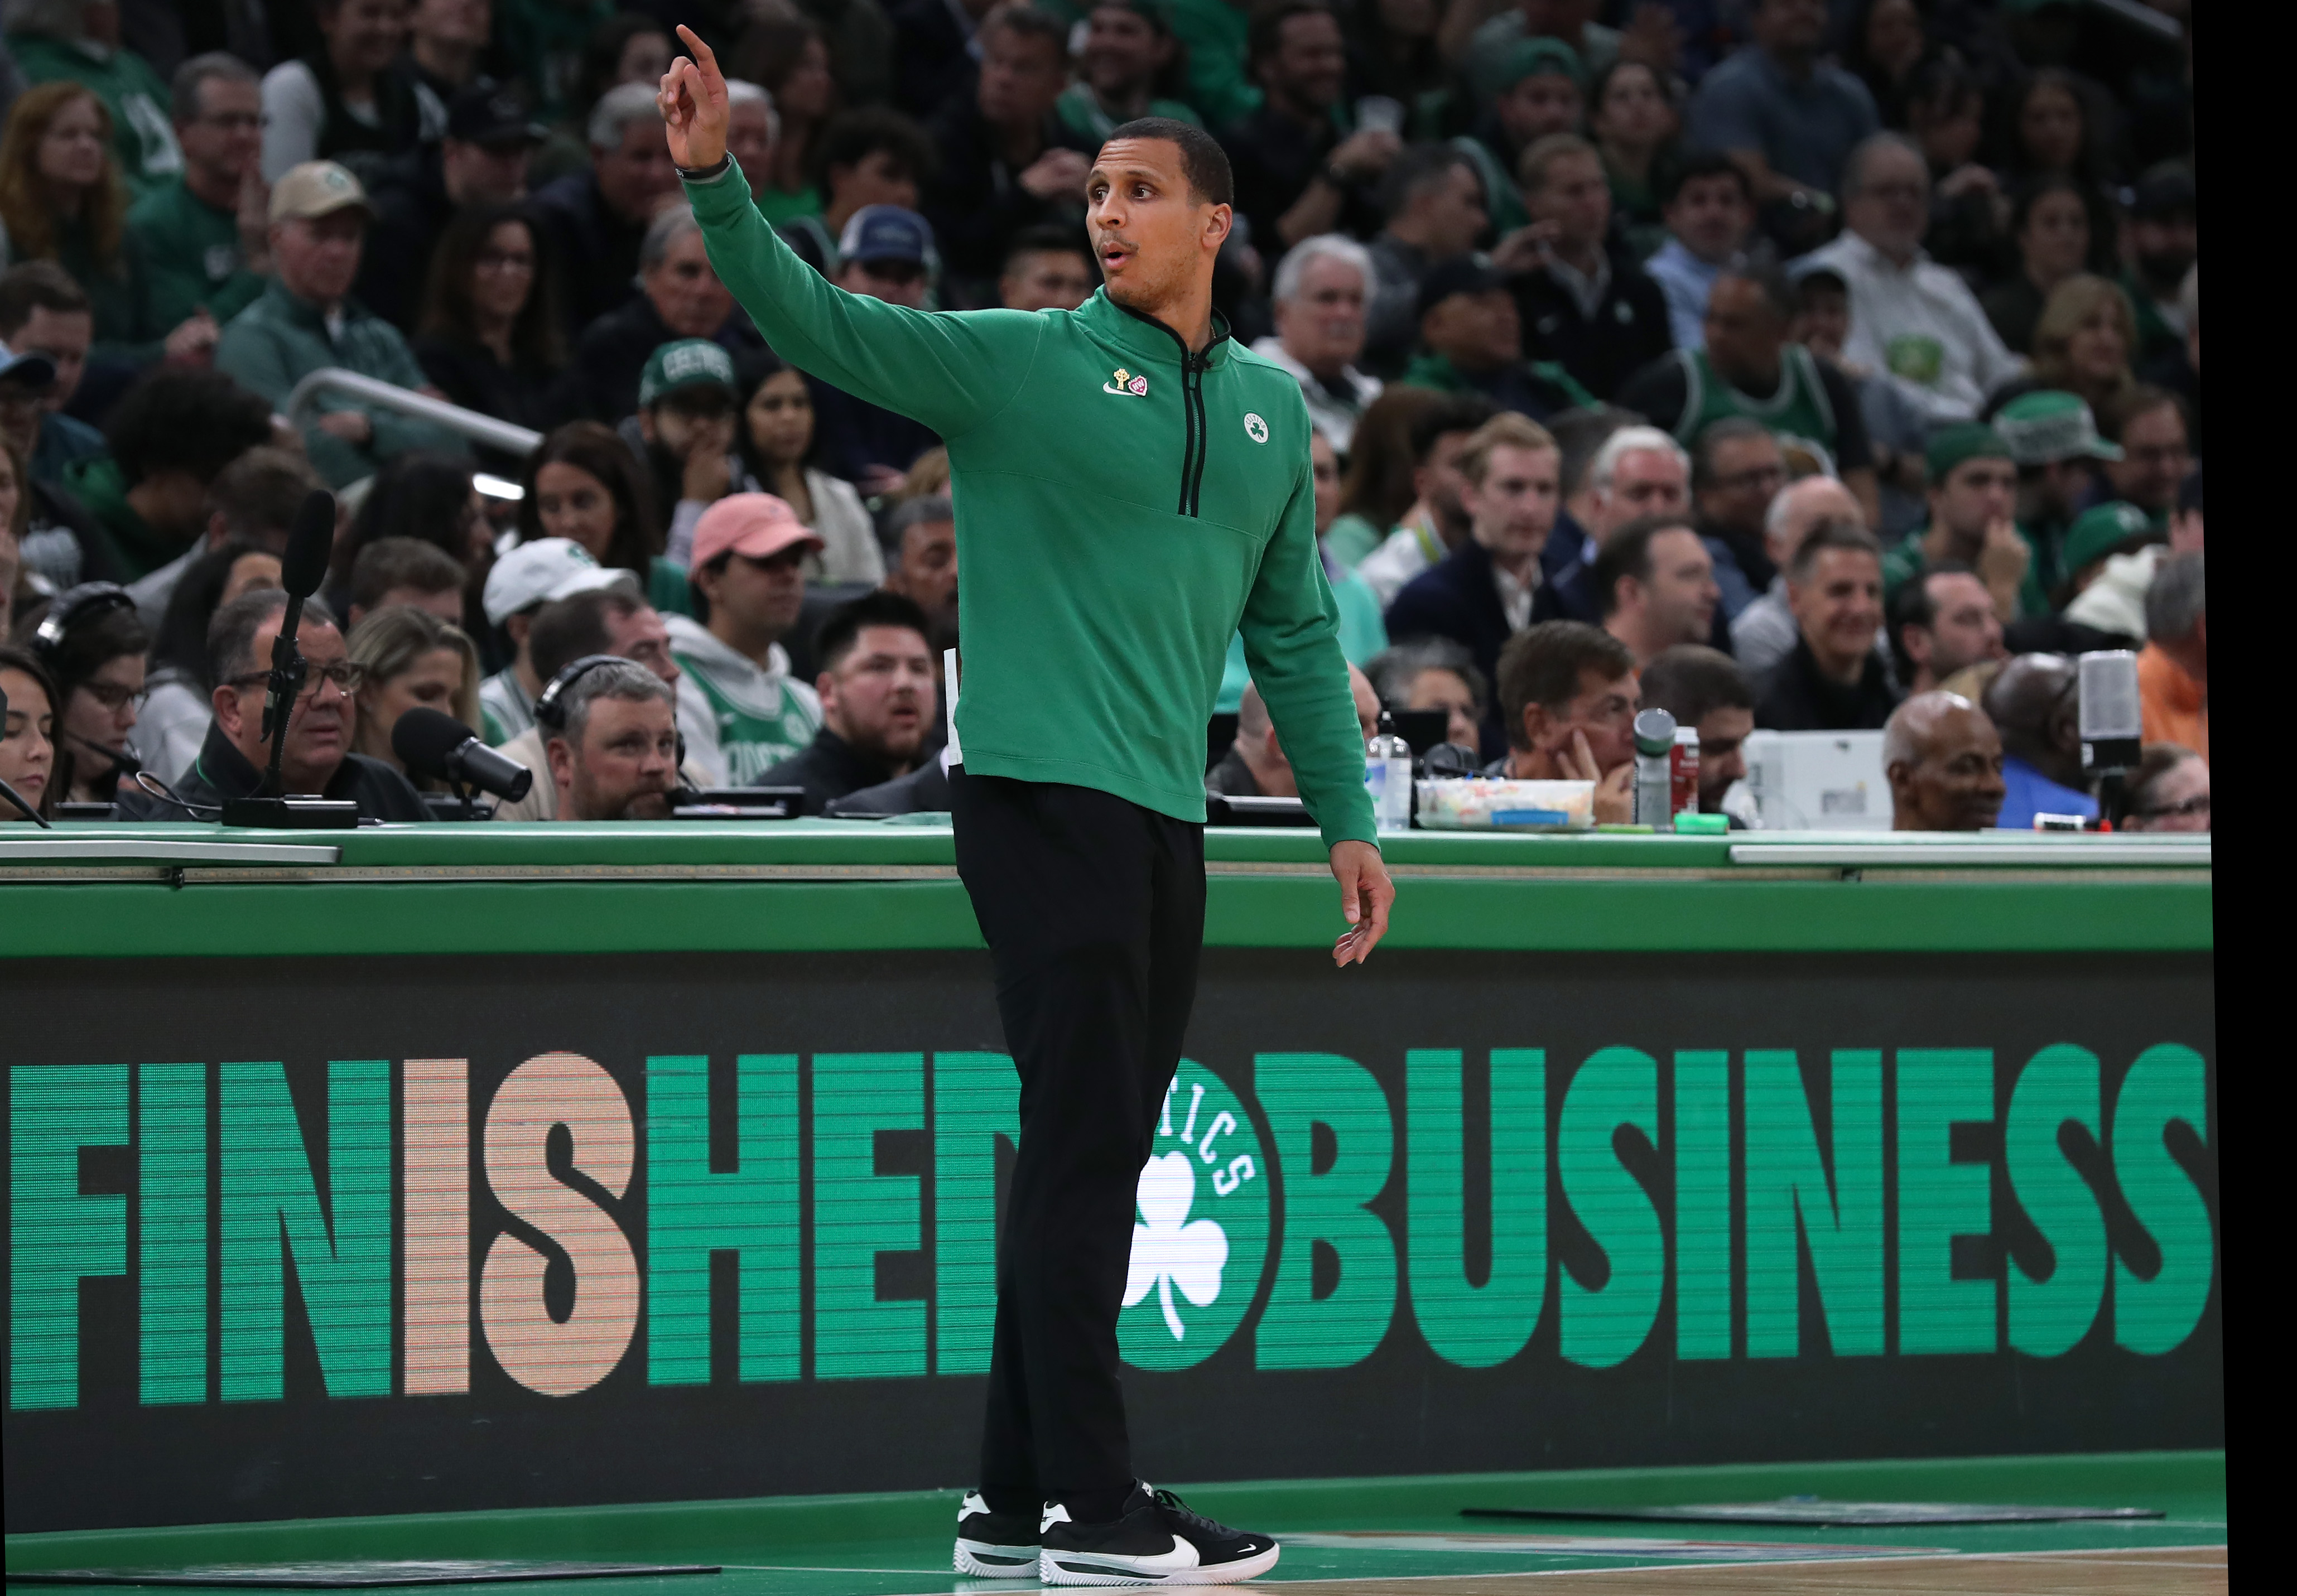 Four key questions facing Brad Stevens, Celtics as big offseason